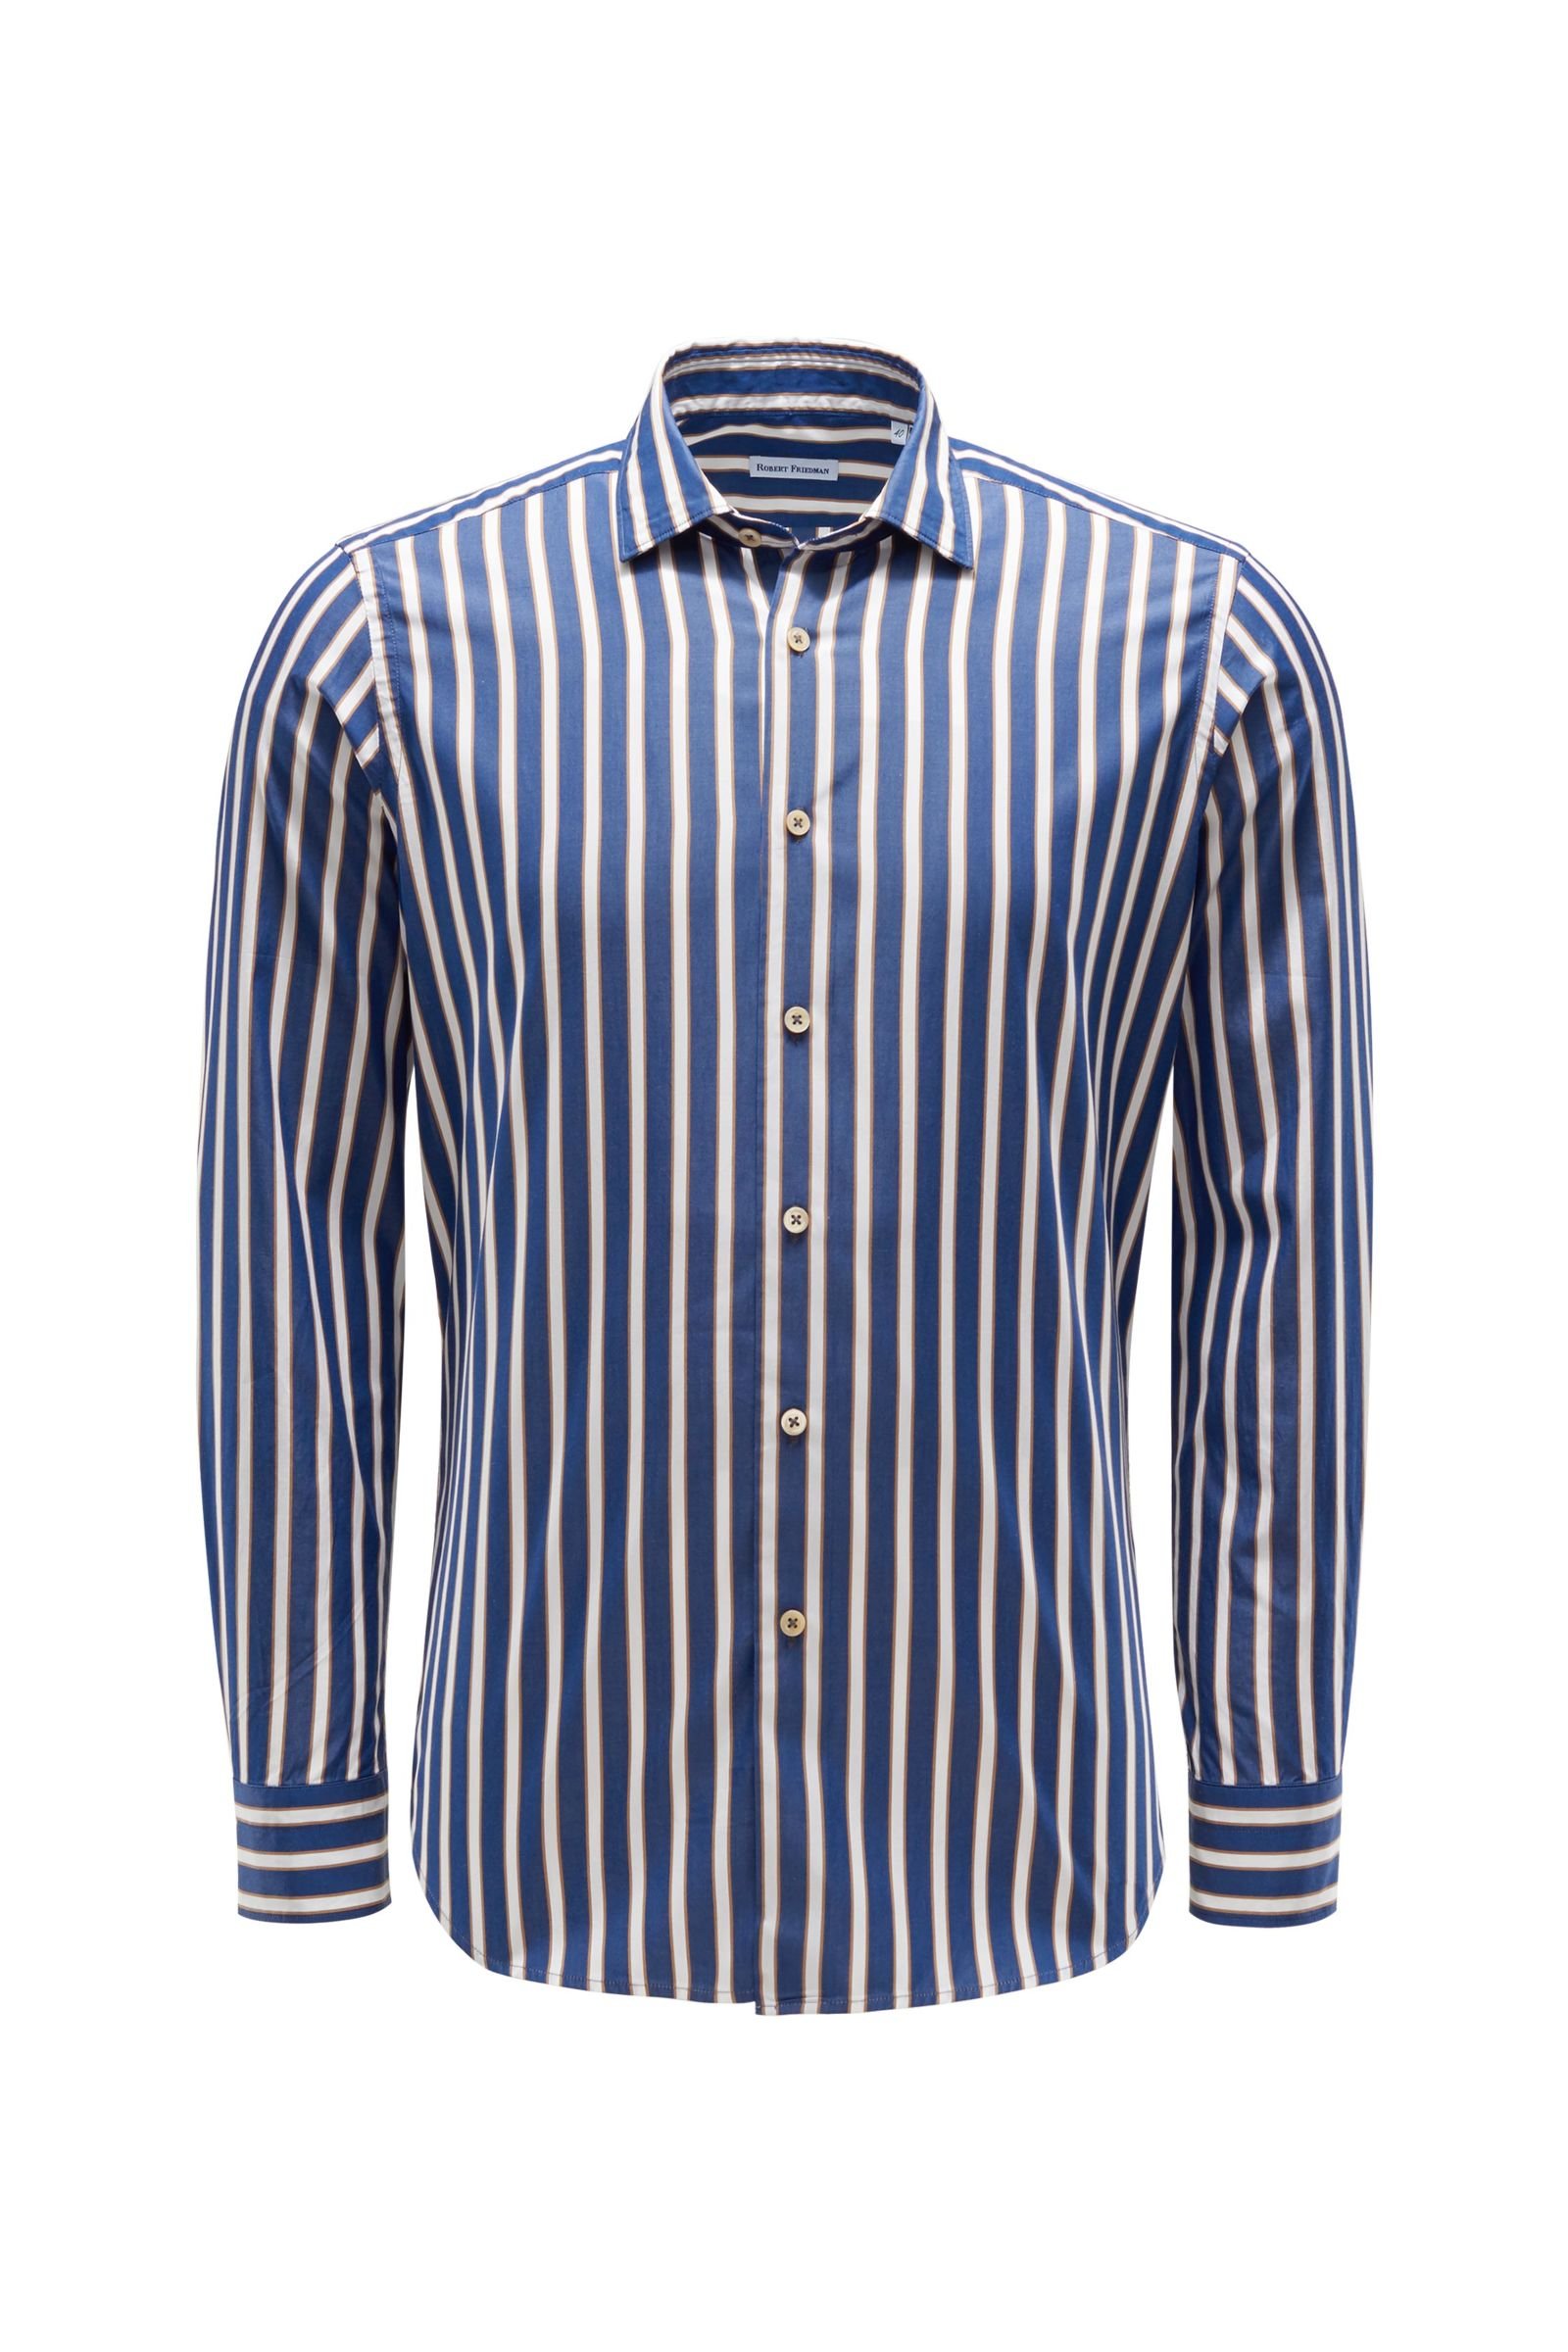 Casual shirt 'Leo' slim collar dark blue/white striped